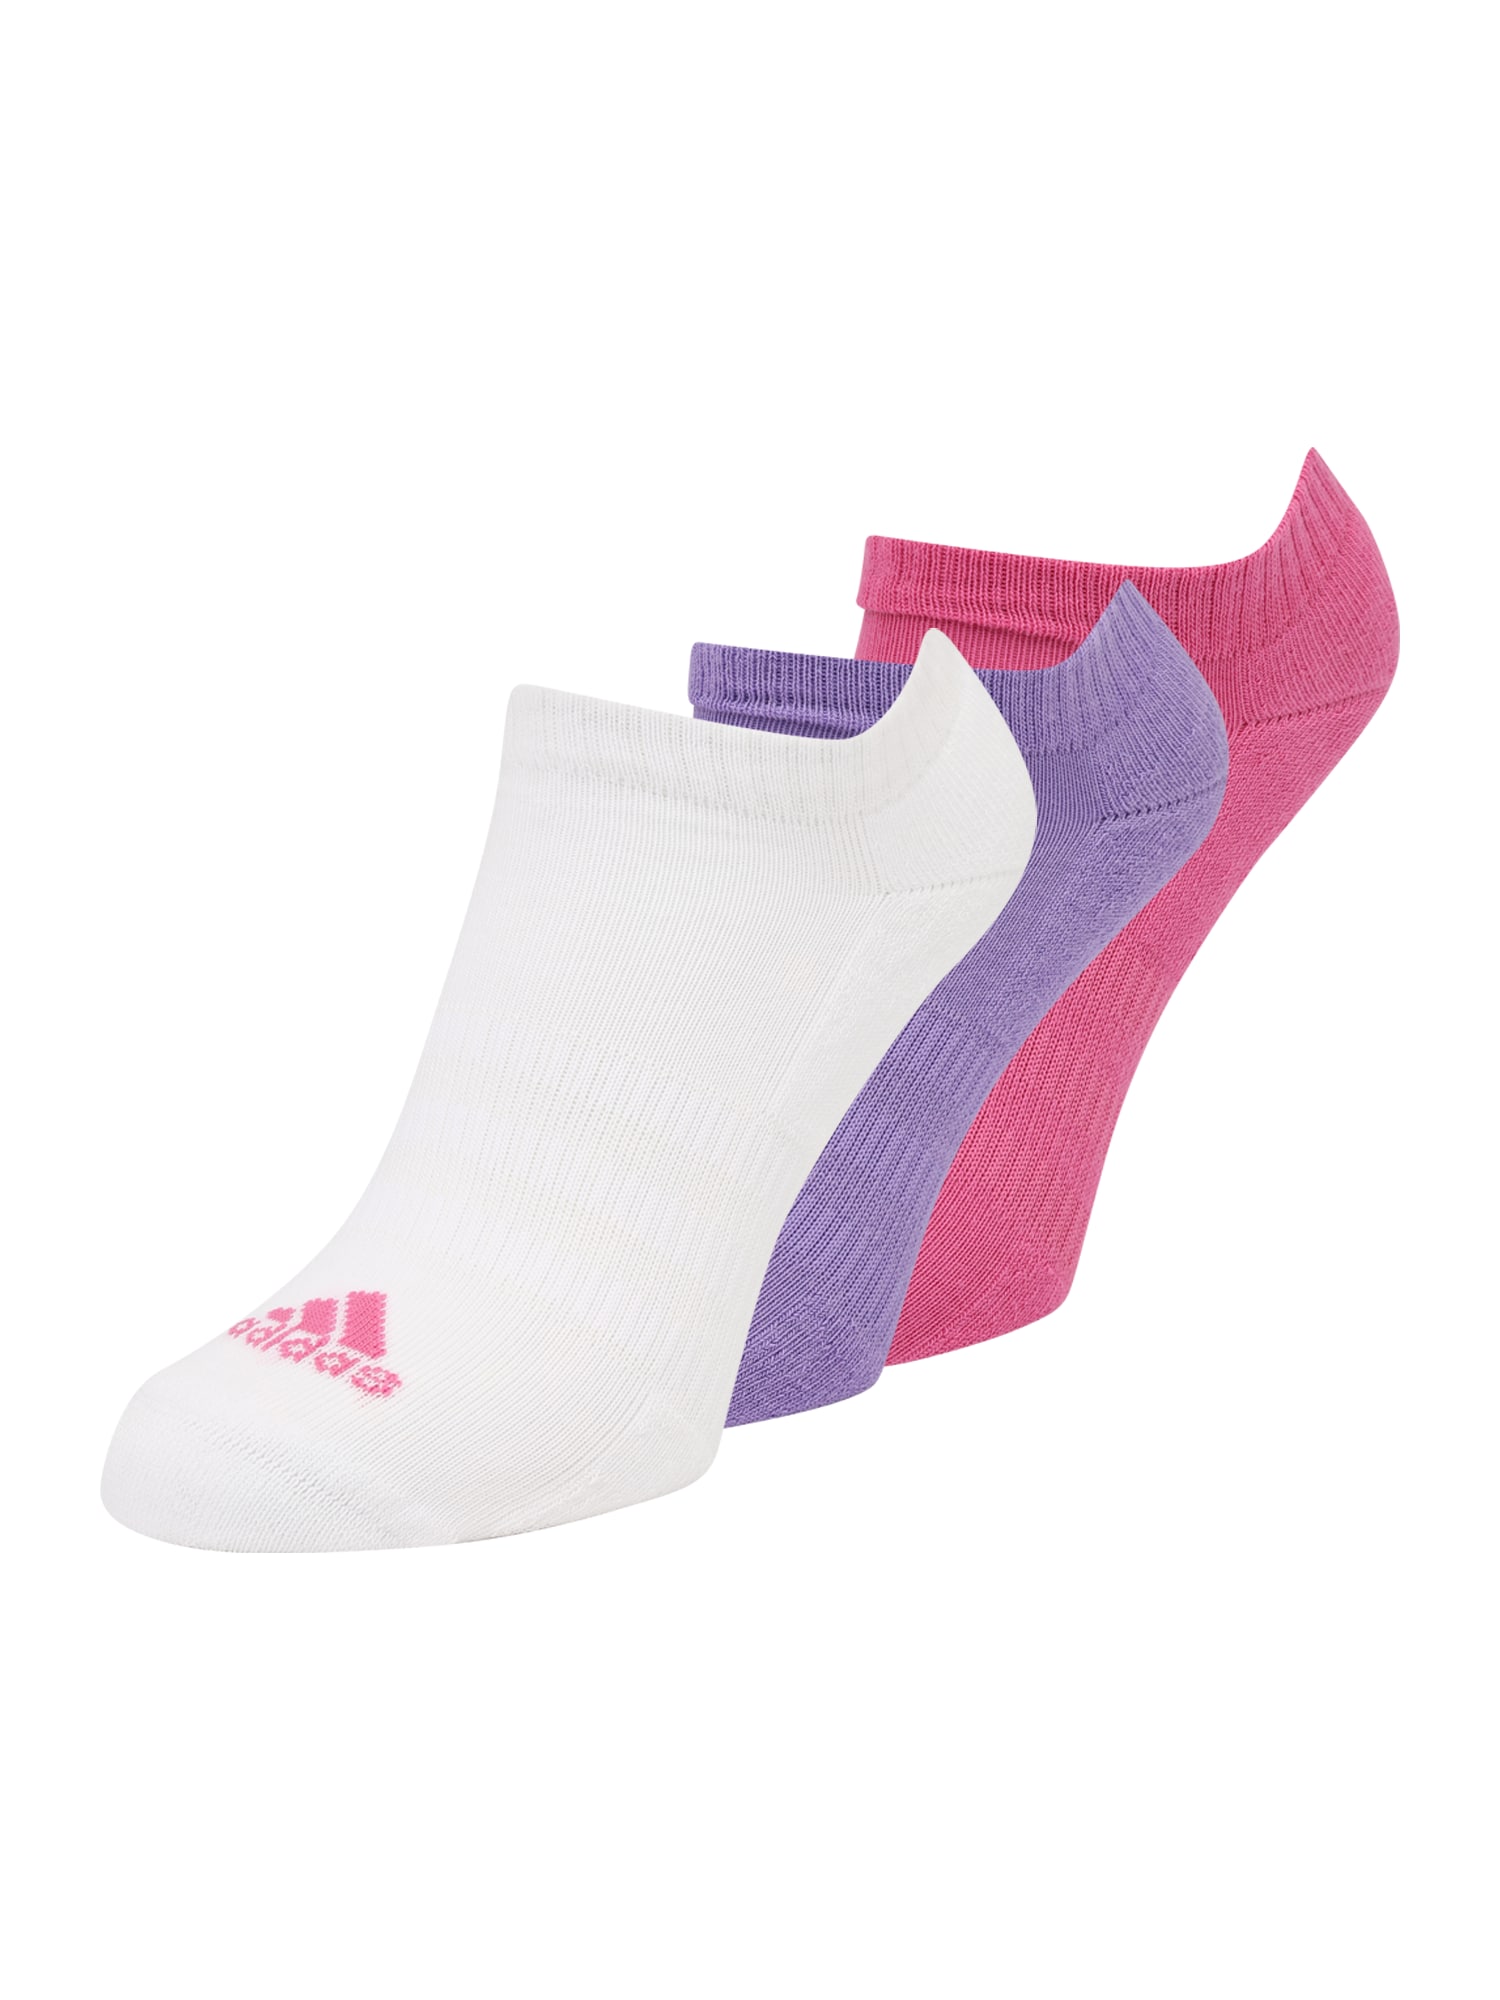 ADIDAS PERFORMANCE Športne nogavice  svetlo lila / temno roza / bela